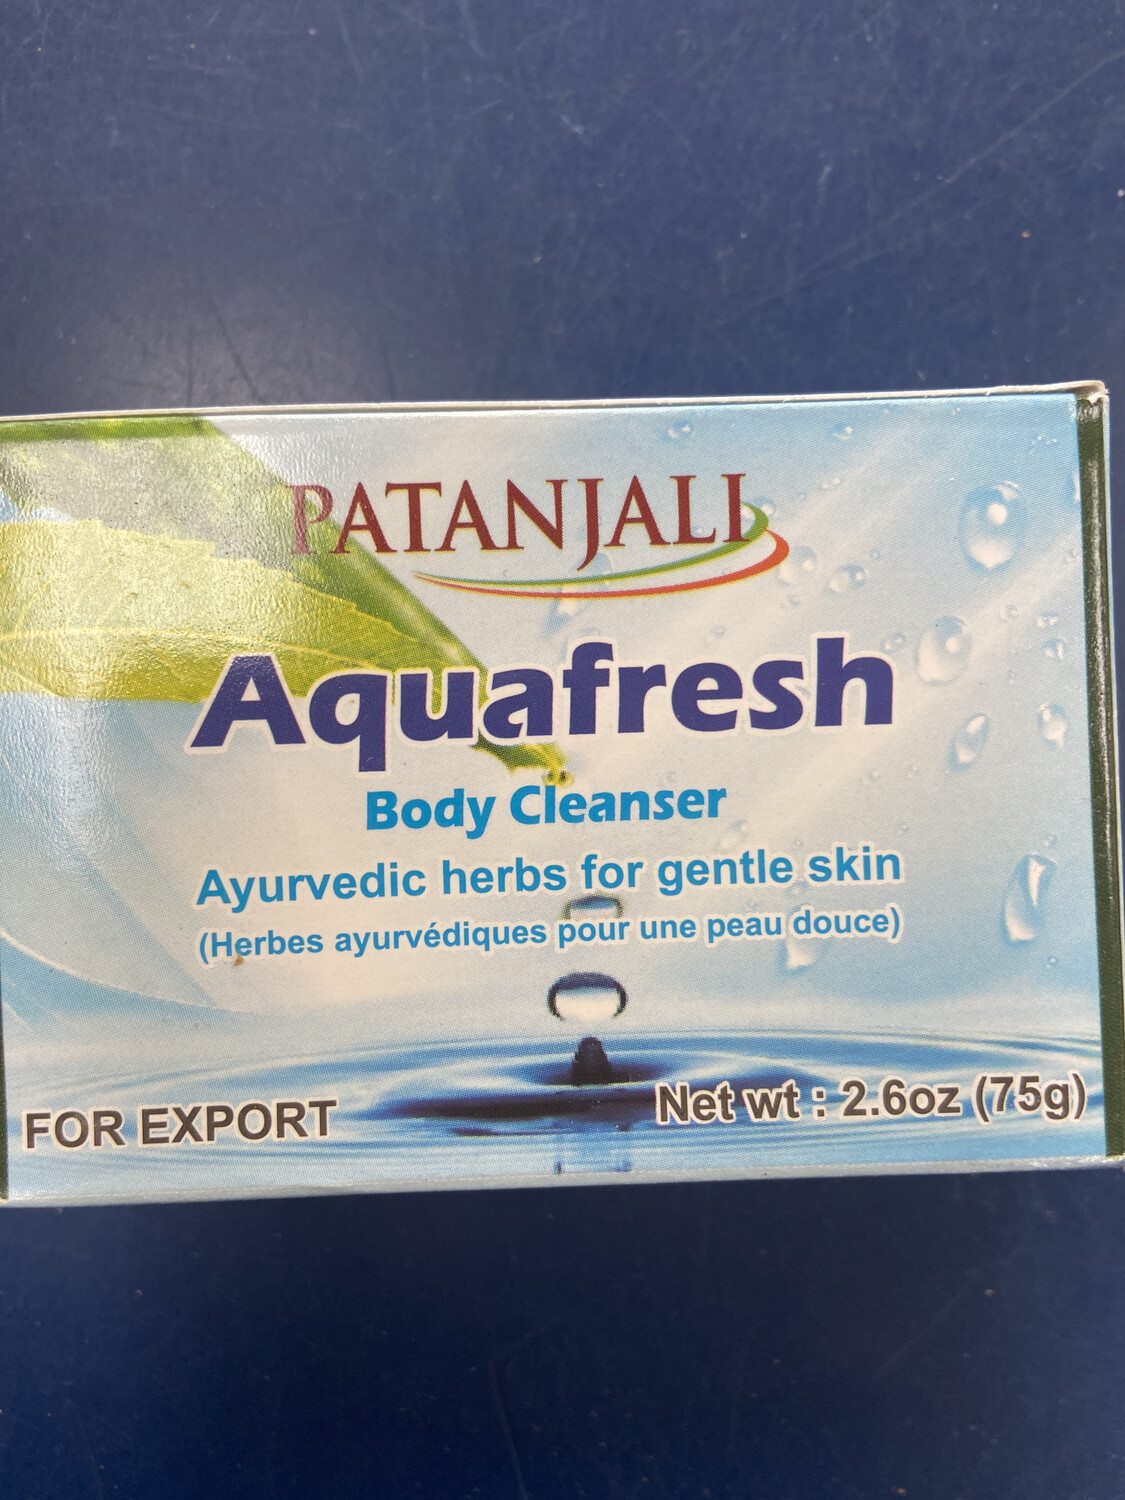 Patanjali Aquafresh Body Cleanser 75g